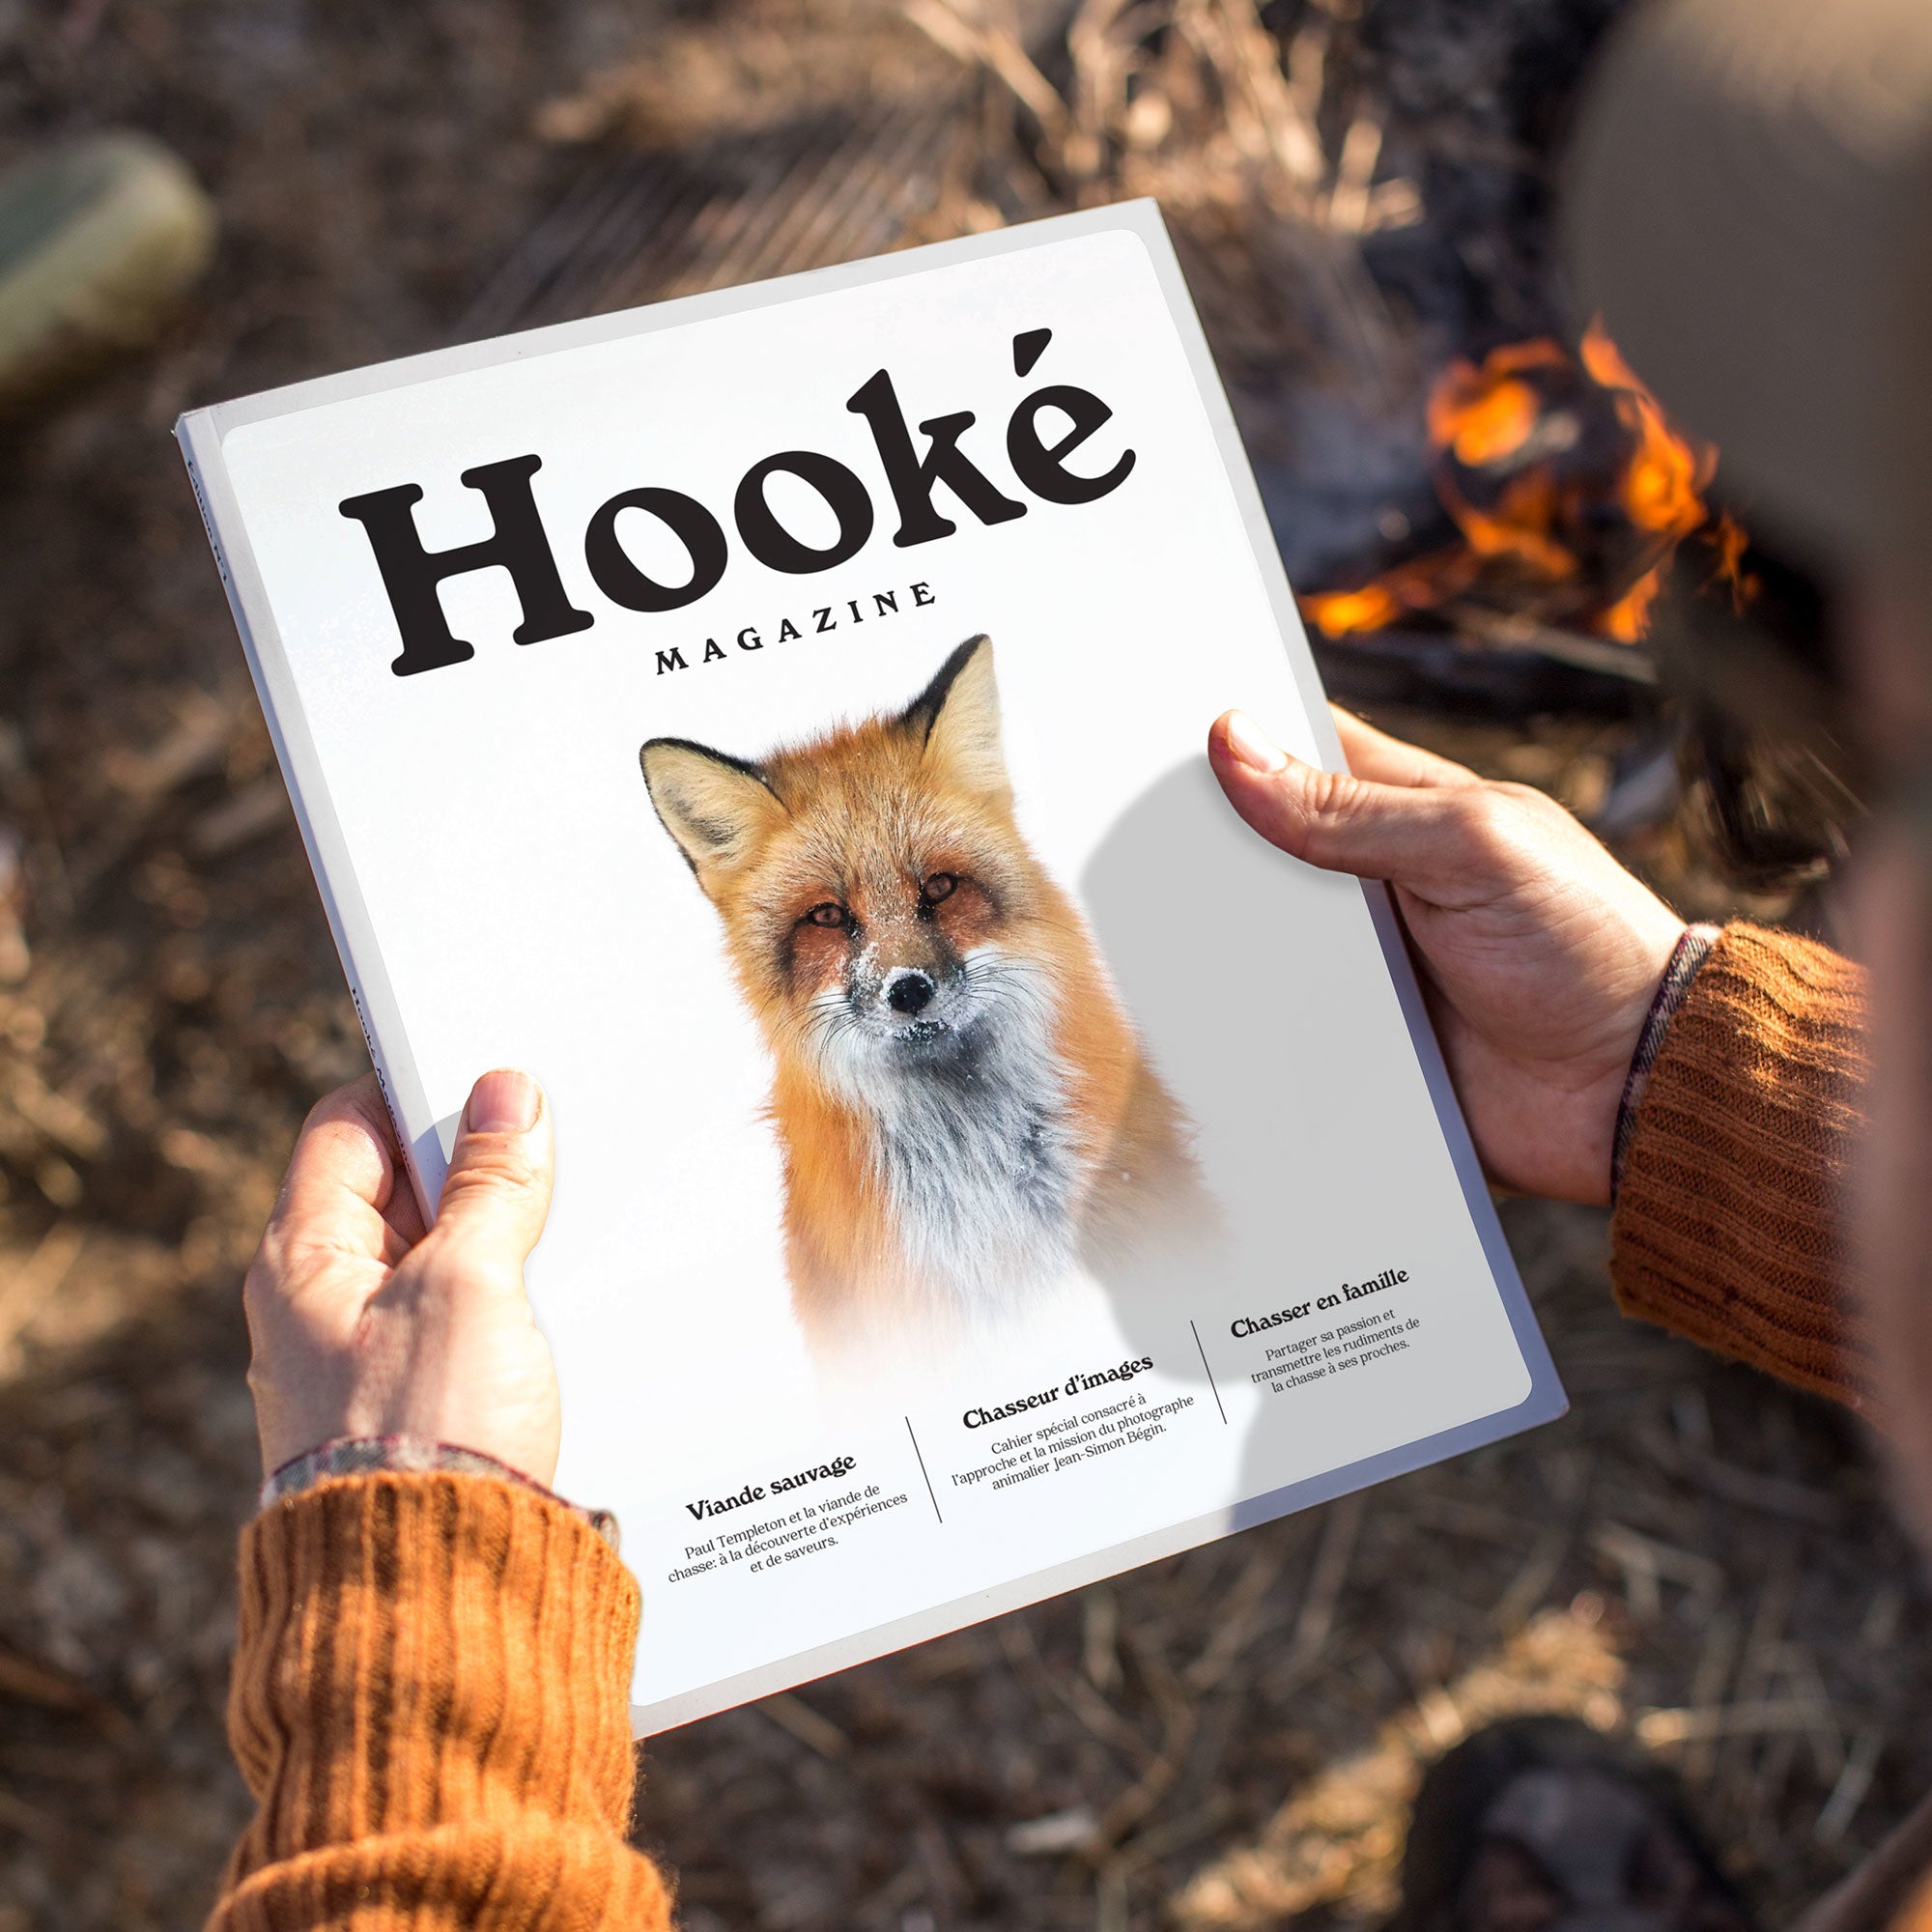 Hooké Magazine 3rd Edition